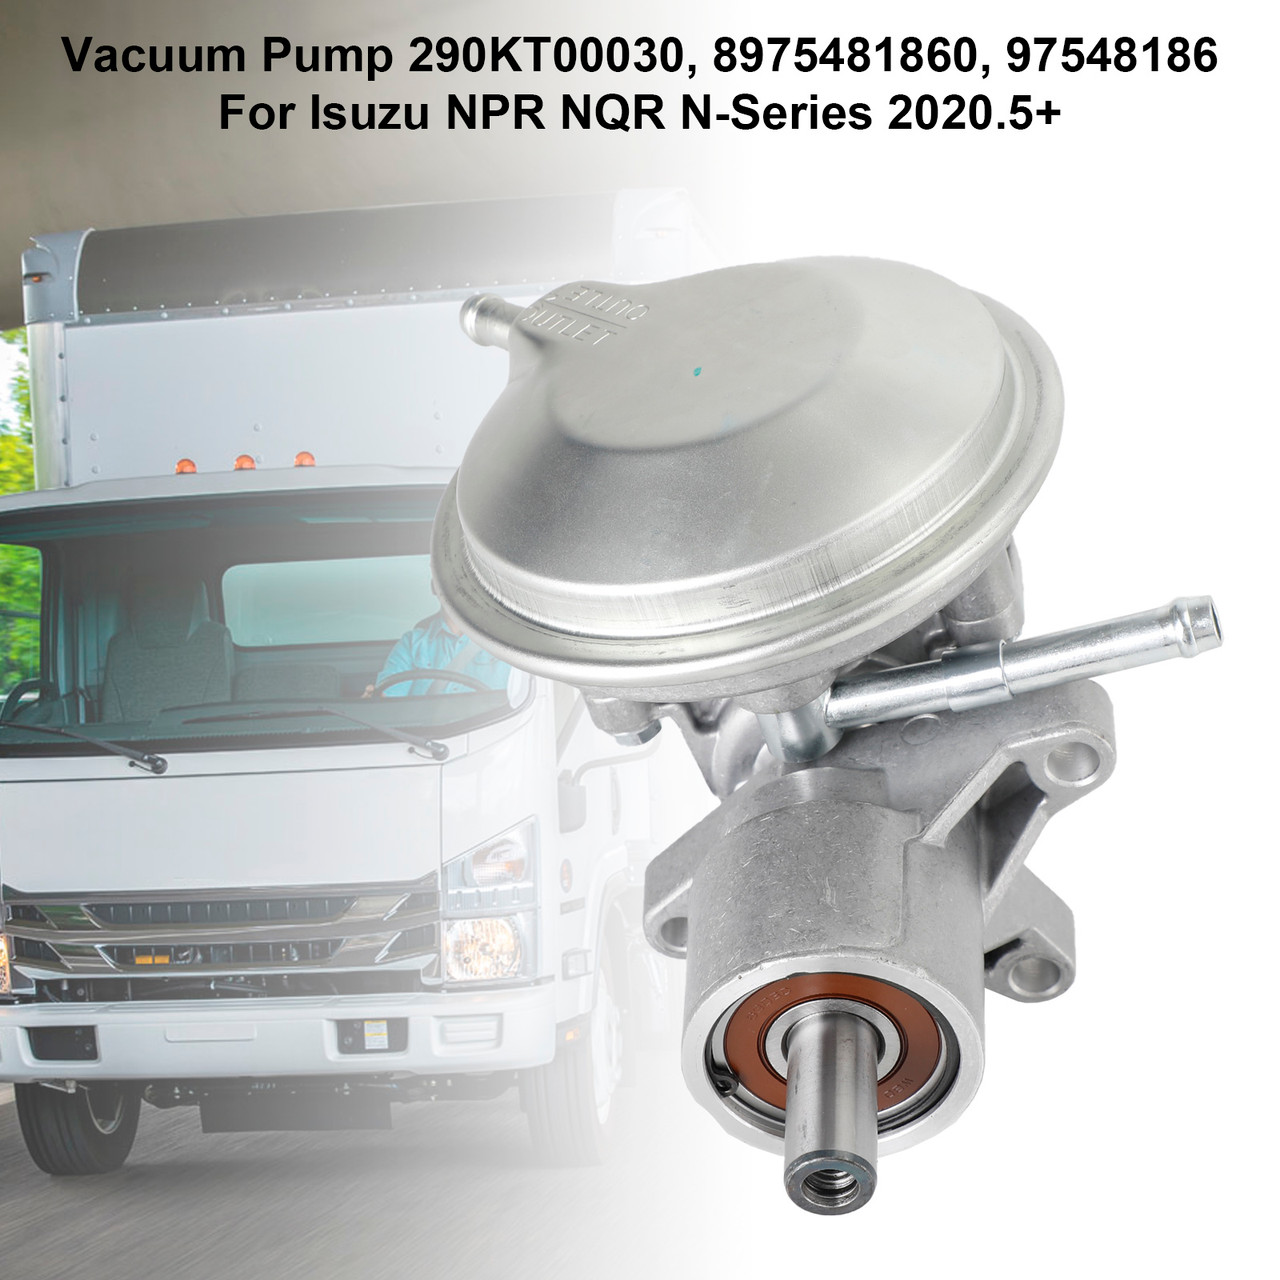 Vacuum Pump 290KT00030, 8975481860, 97548186 For Isuzu NPR NQR N-Series 2020.5+